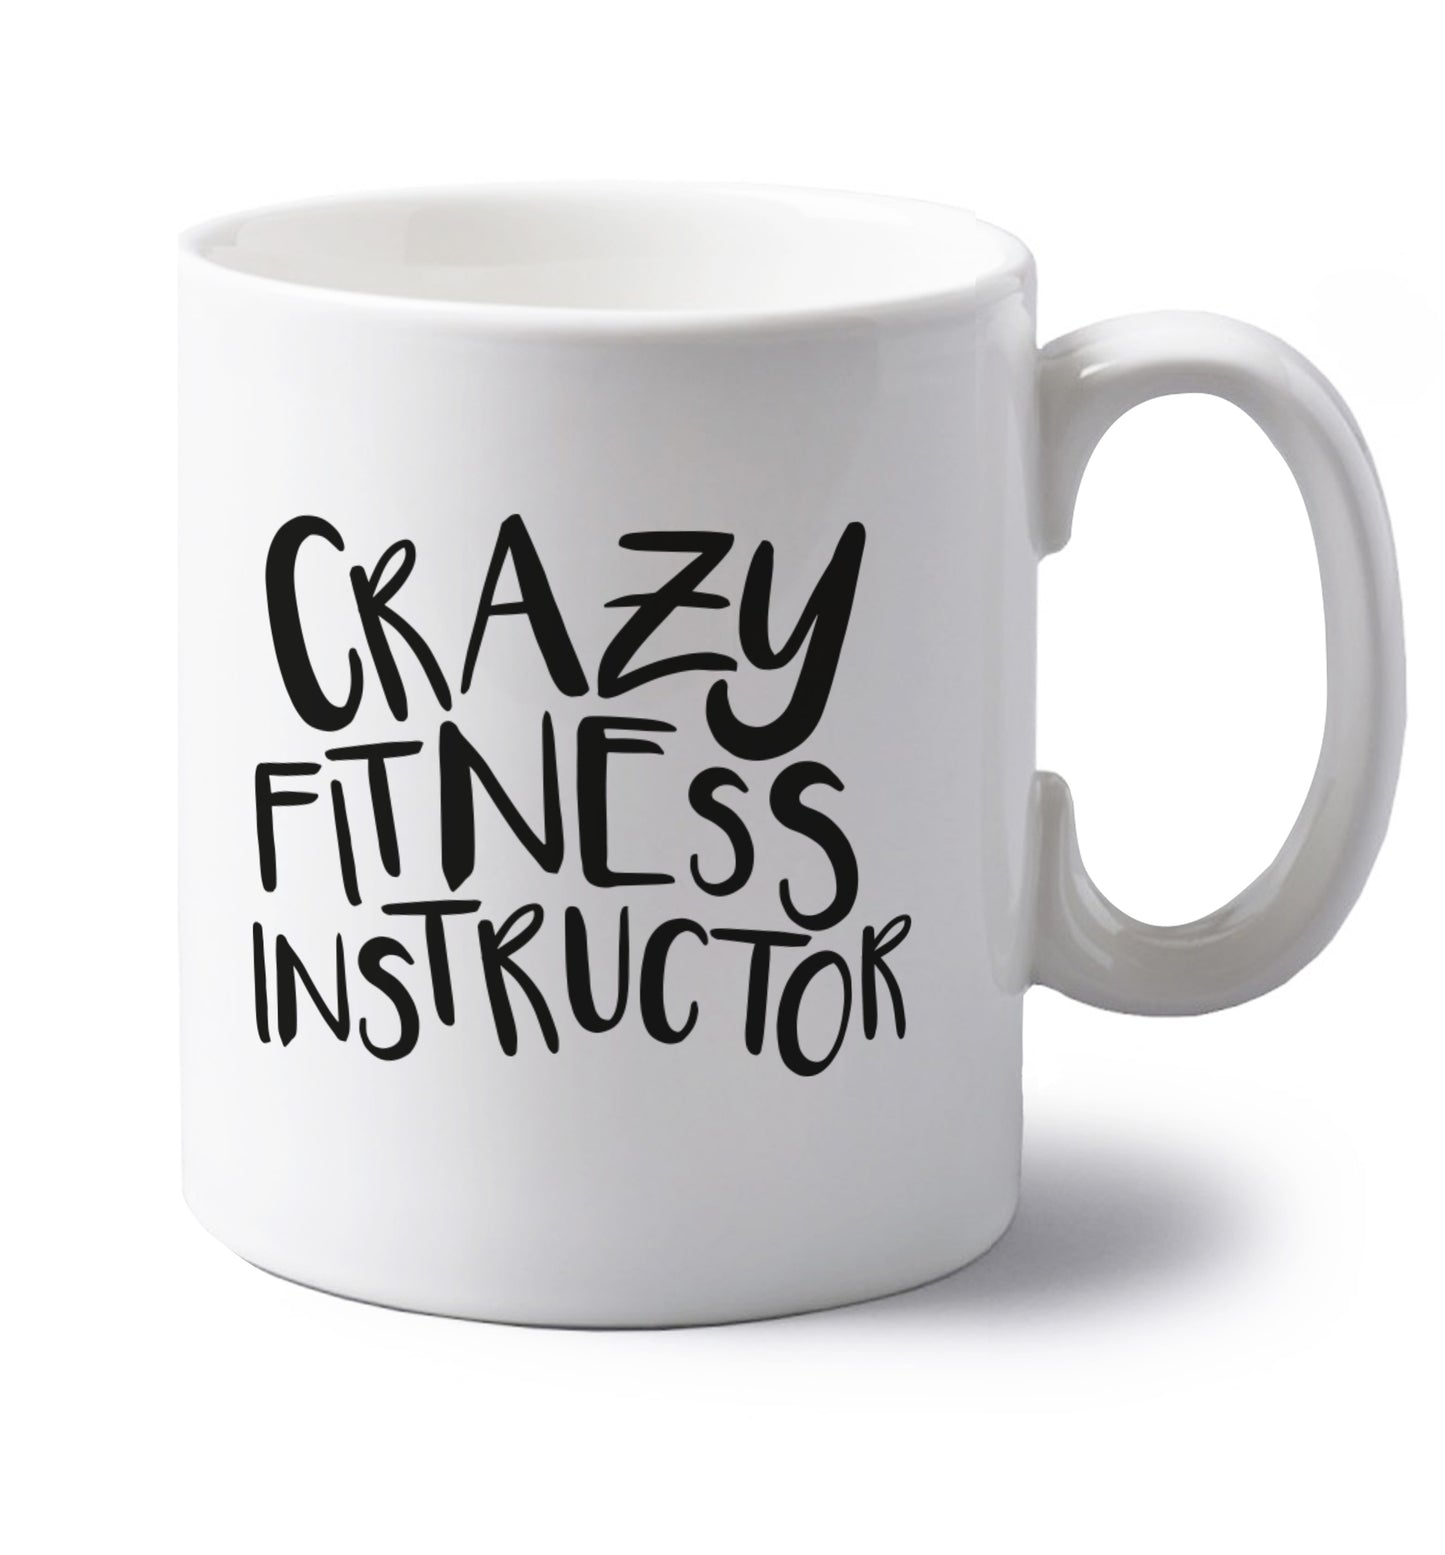 Crazy fitness instructor left handed white ceramic mug 